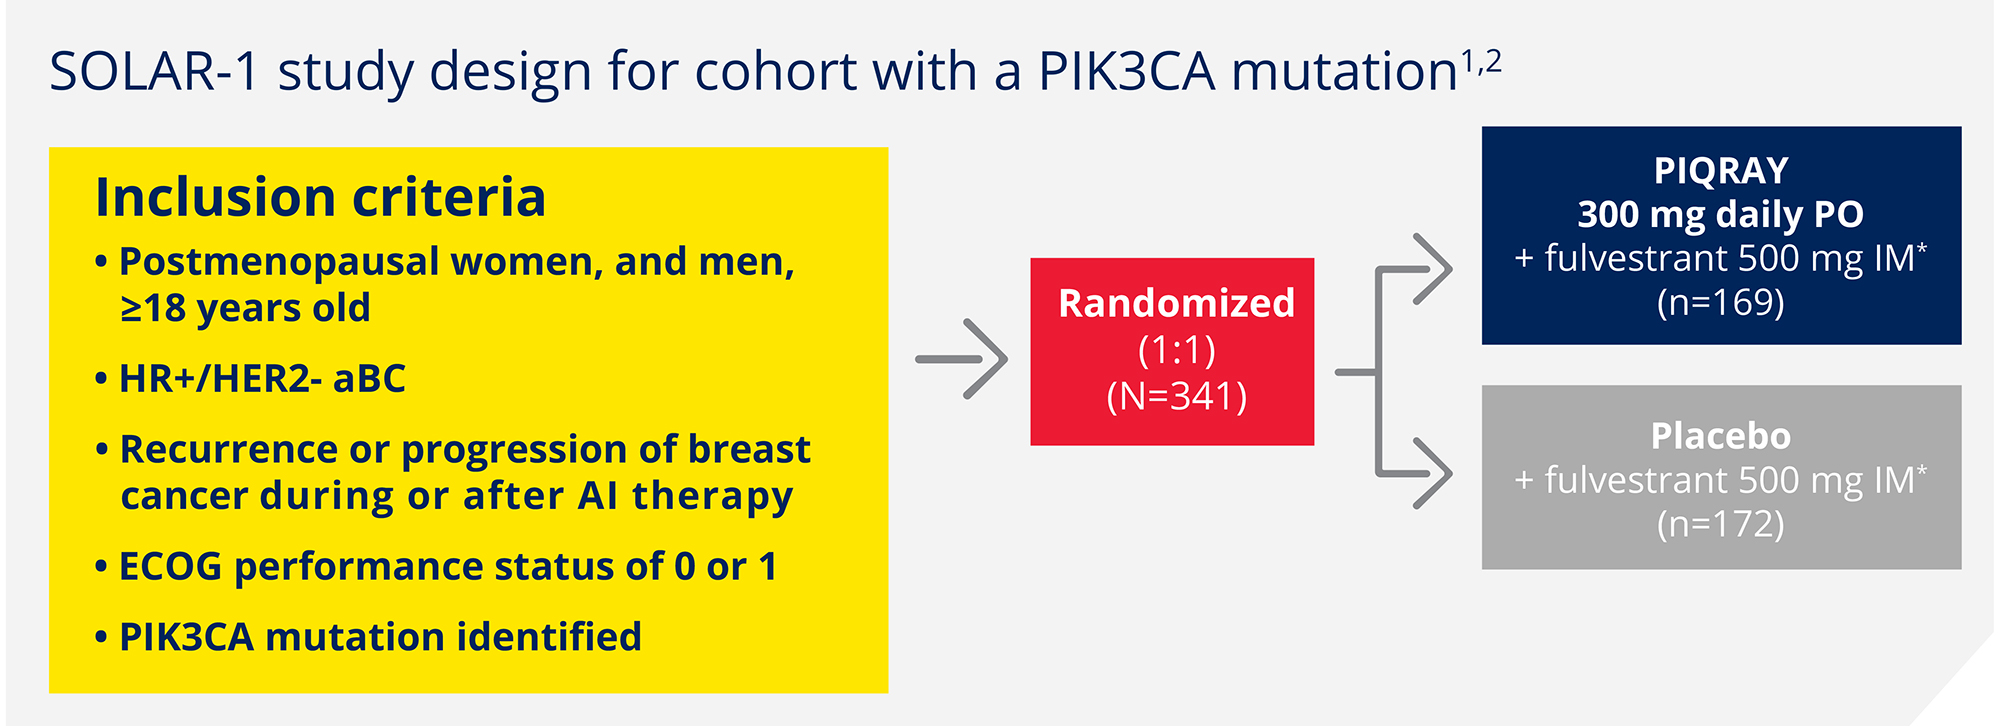 SOLAR-1 study design for cohort with a PIK3CA mutation